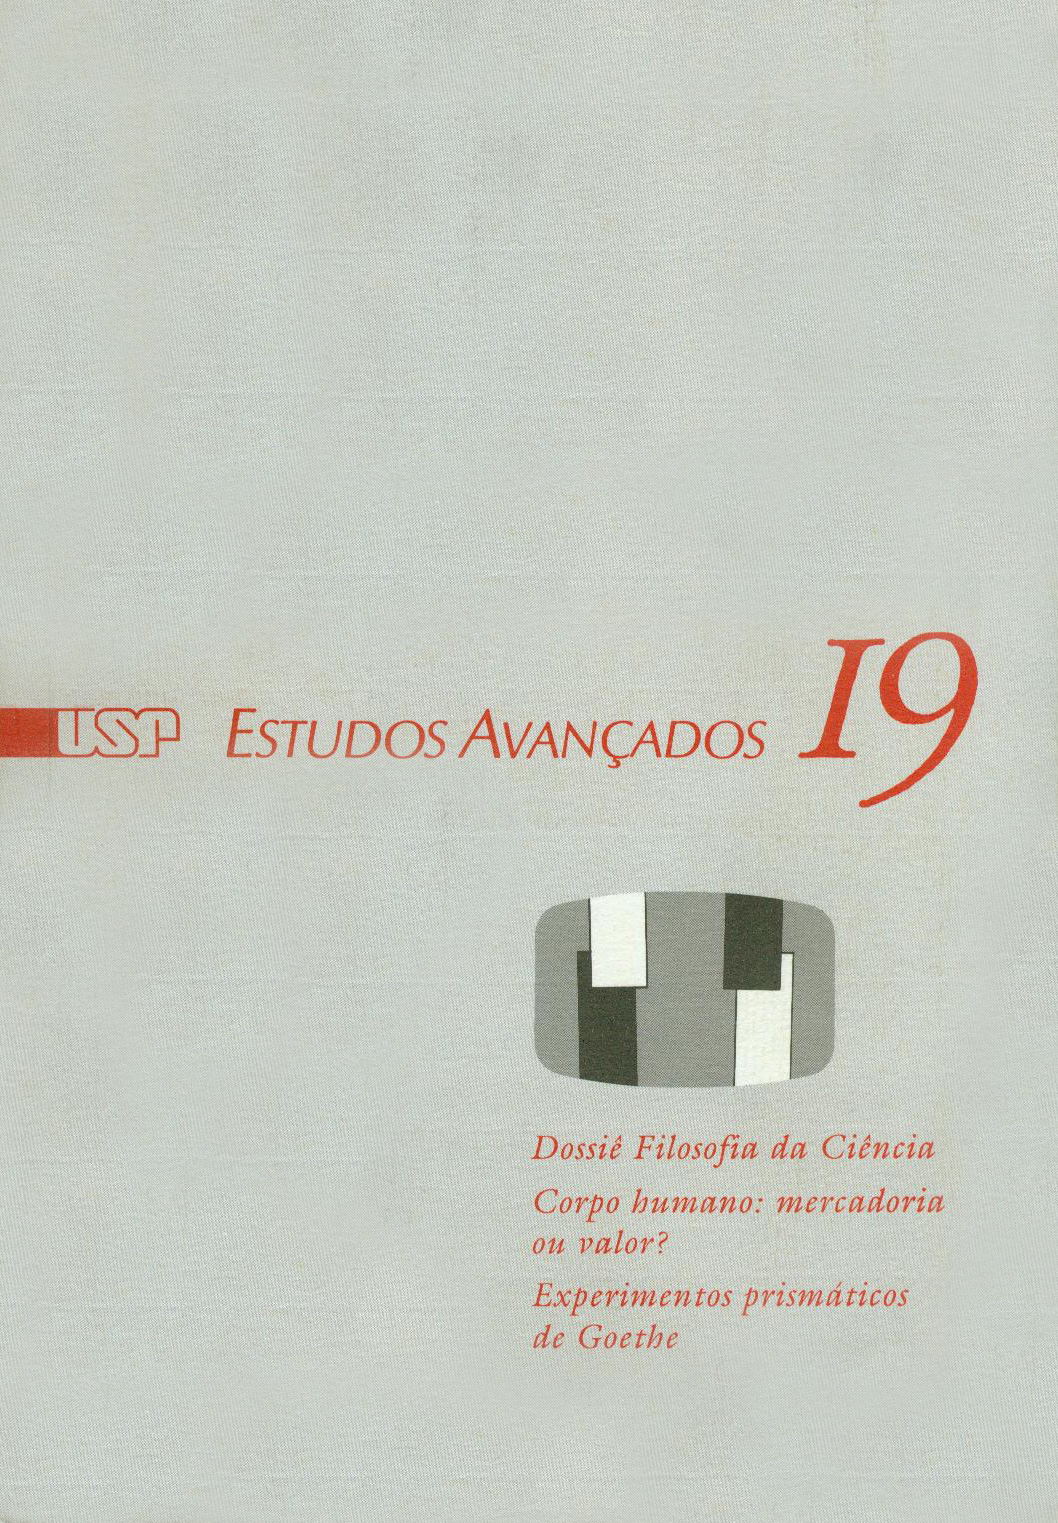 					Visualizar v. 7 n. 19 (1993)
				